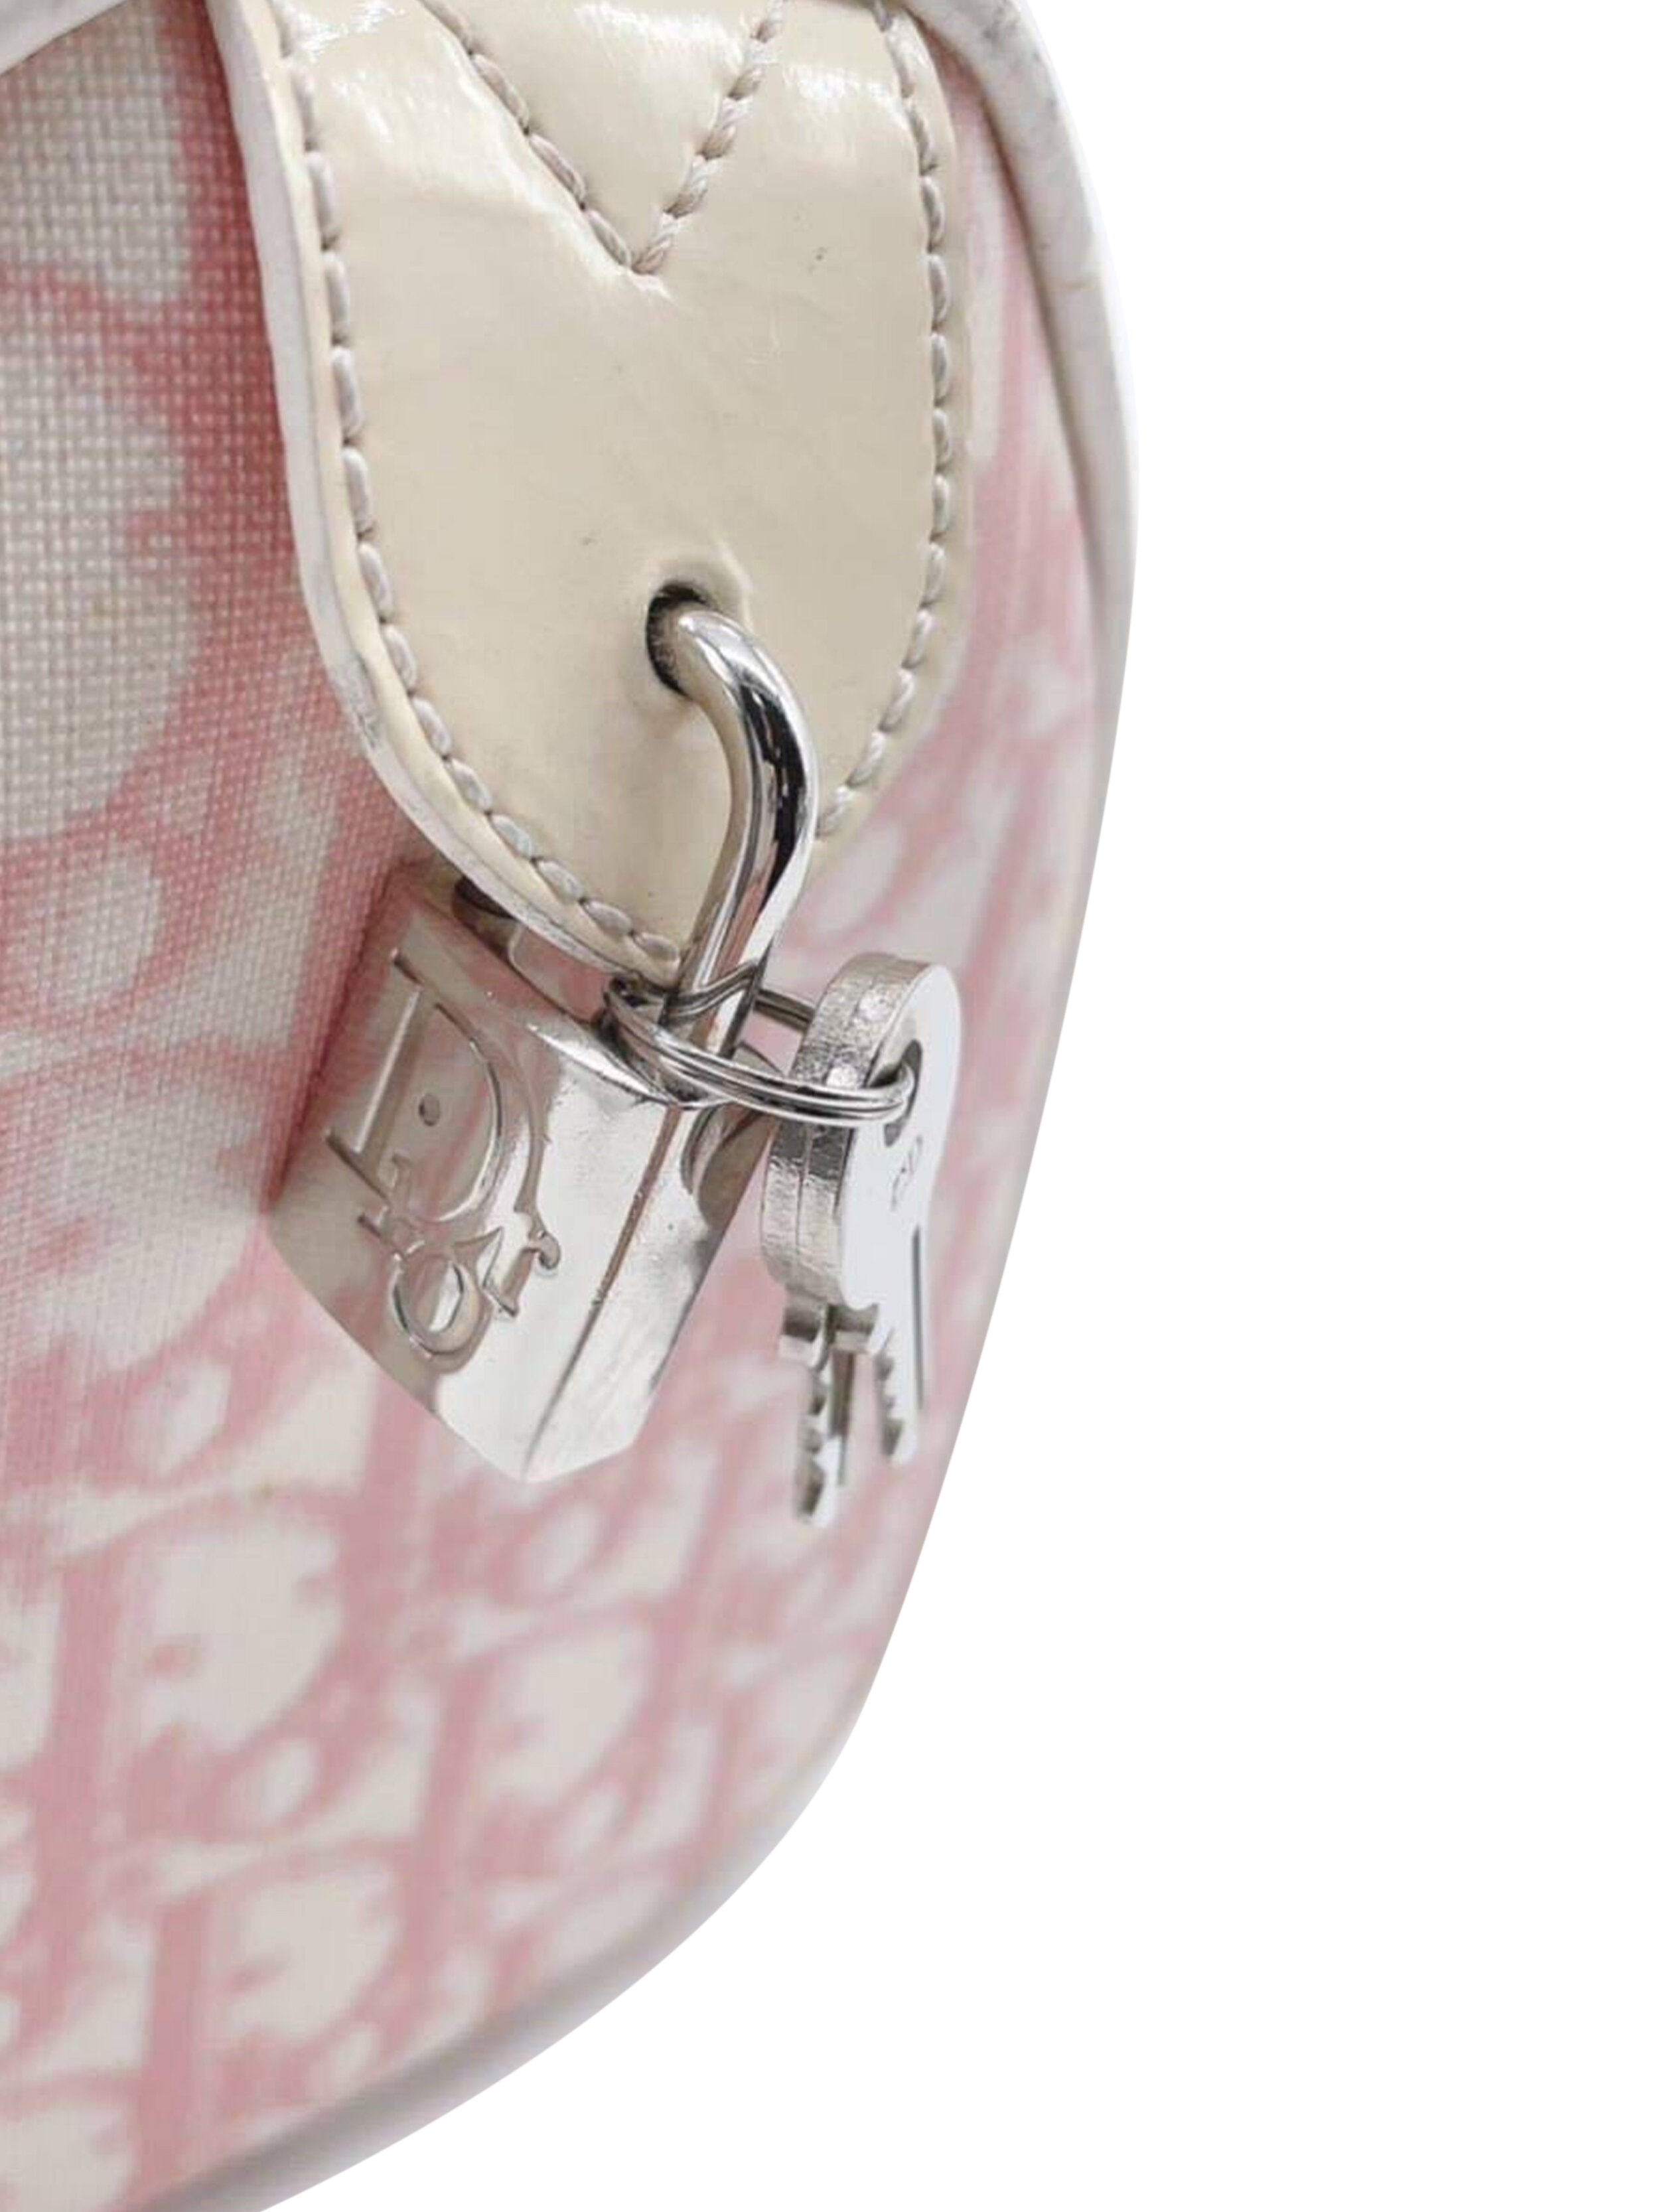 CHRISTIAN DIOR Pink Boston Girl Handbag